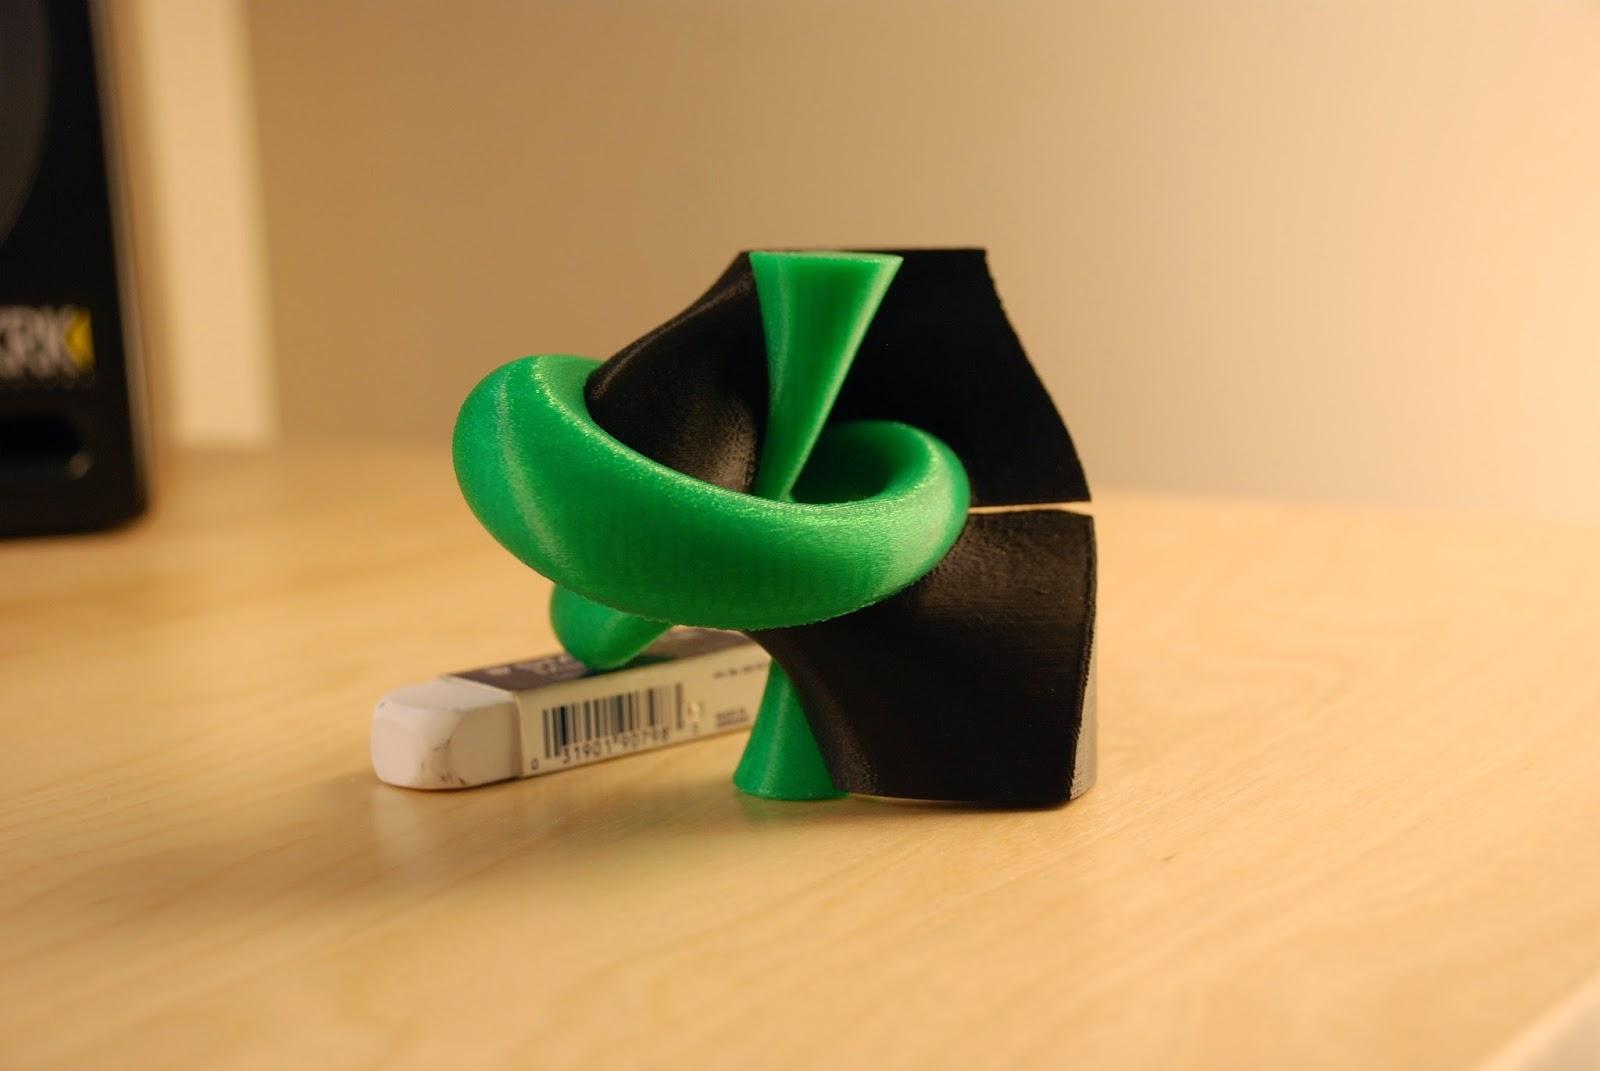 Mathematics/Physics Student Creates 3D Printed Puzzle of Trefoil Knot